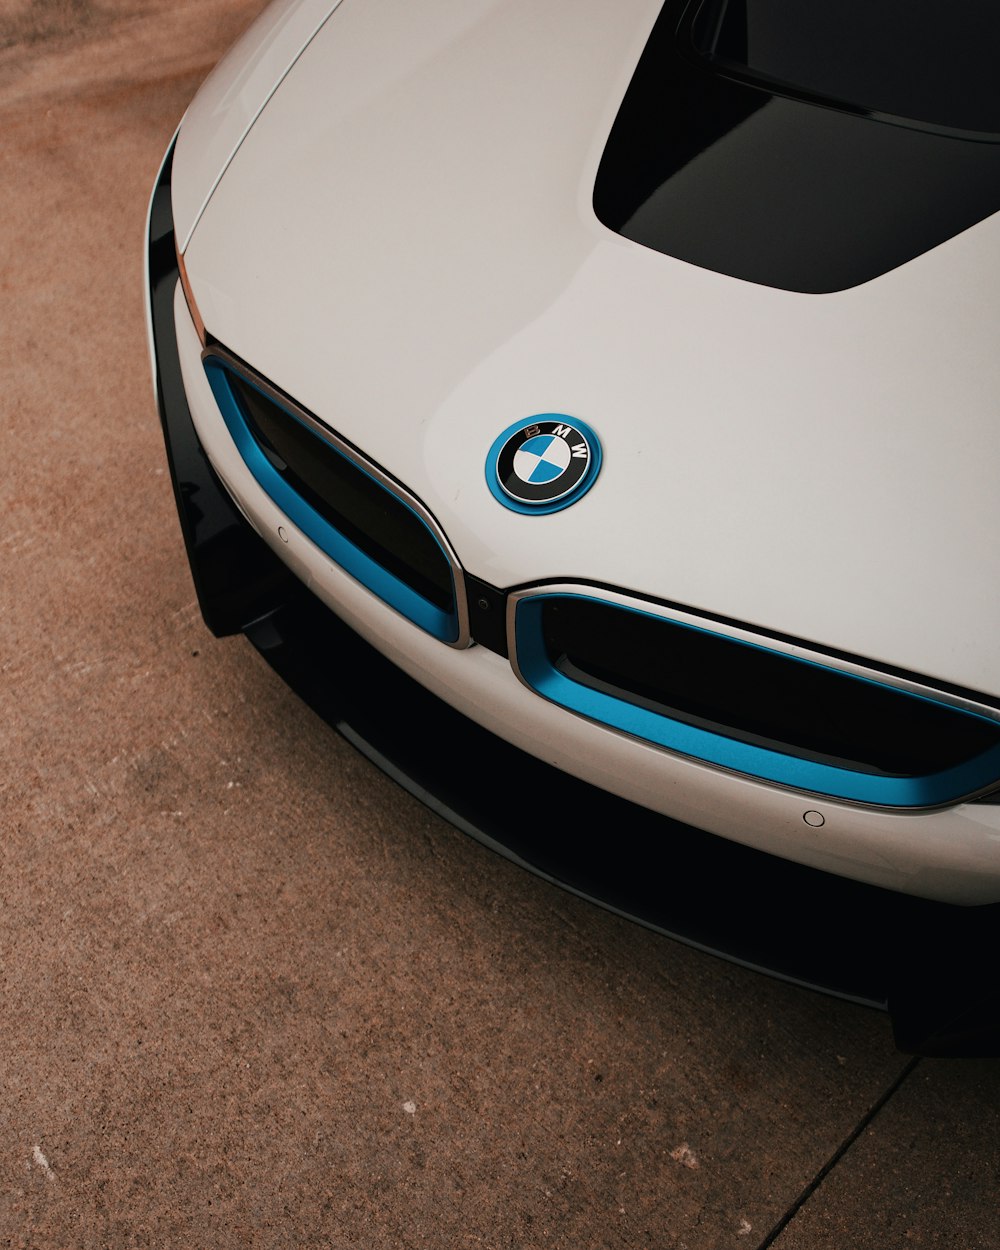 white BMW car